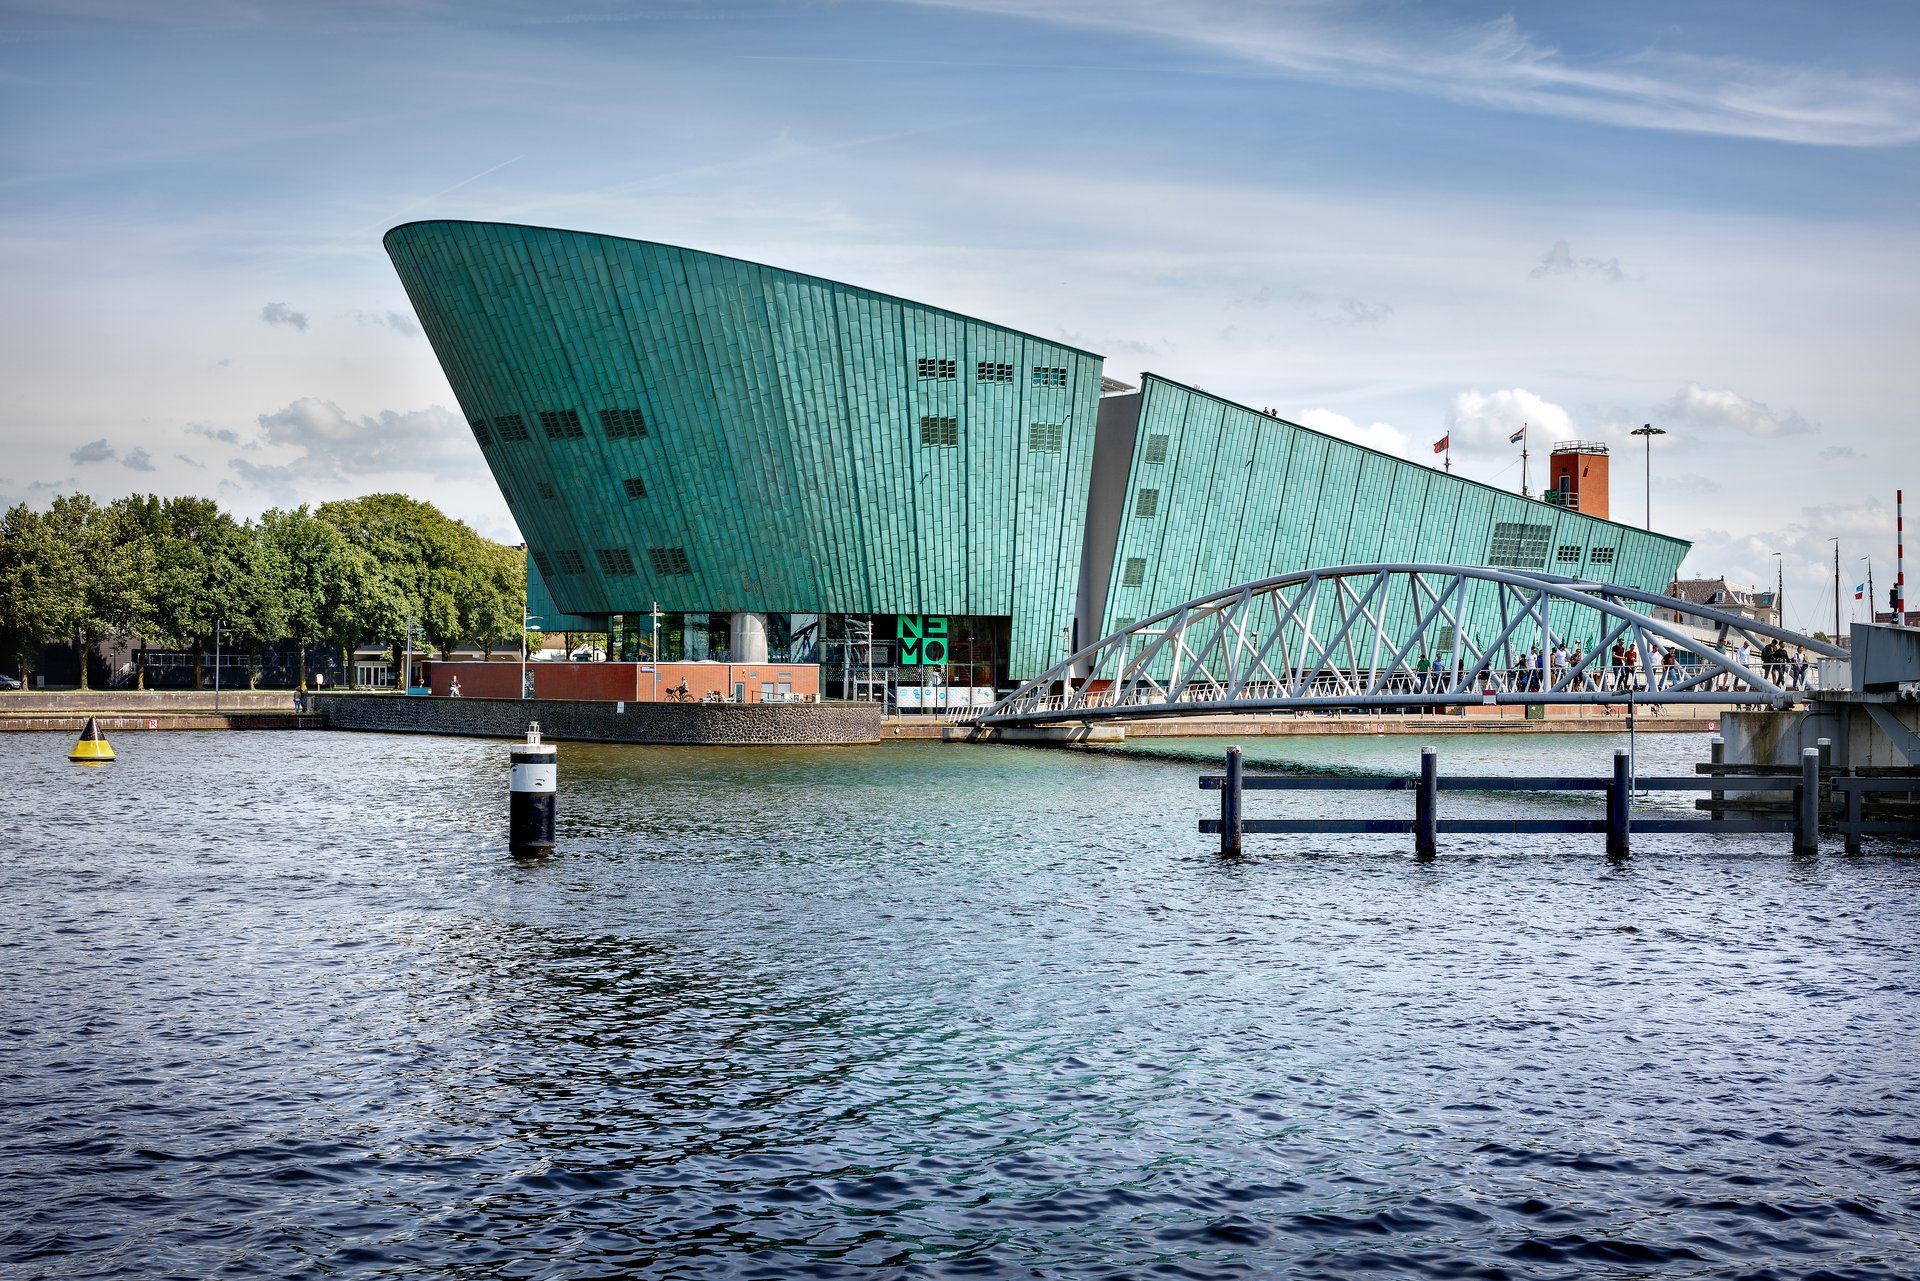 The Nemo science museum in Amsterdam